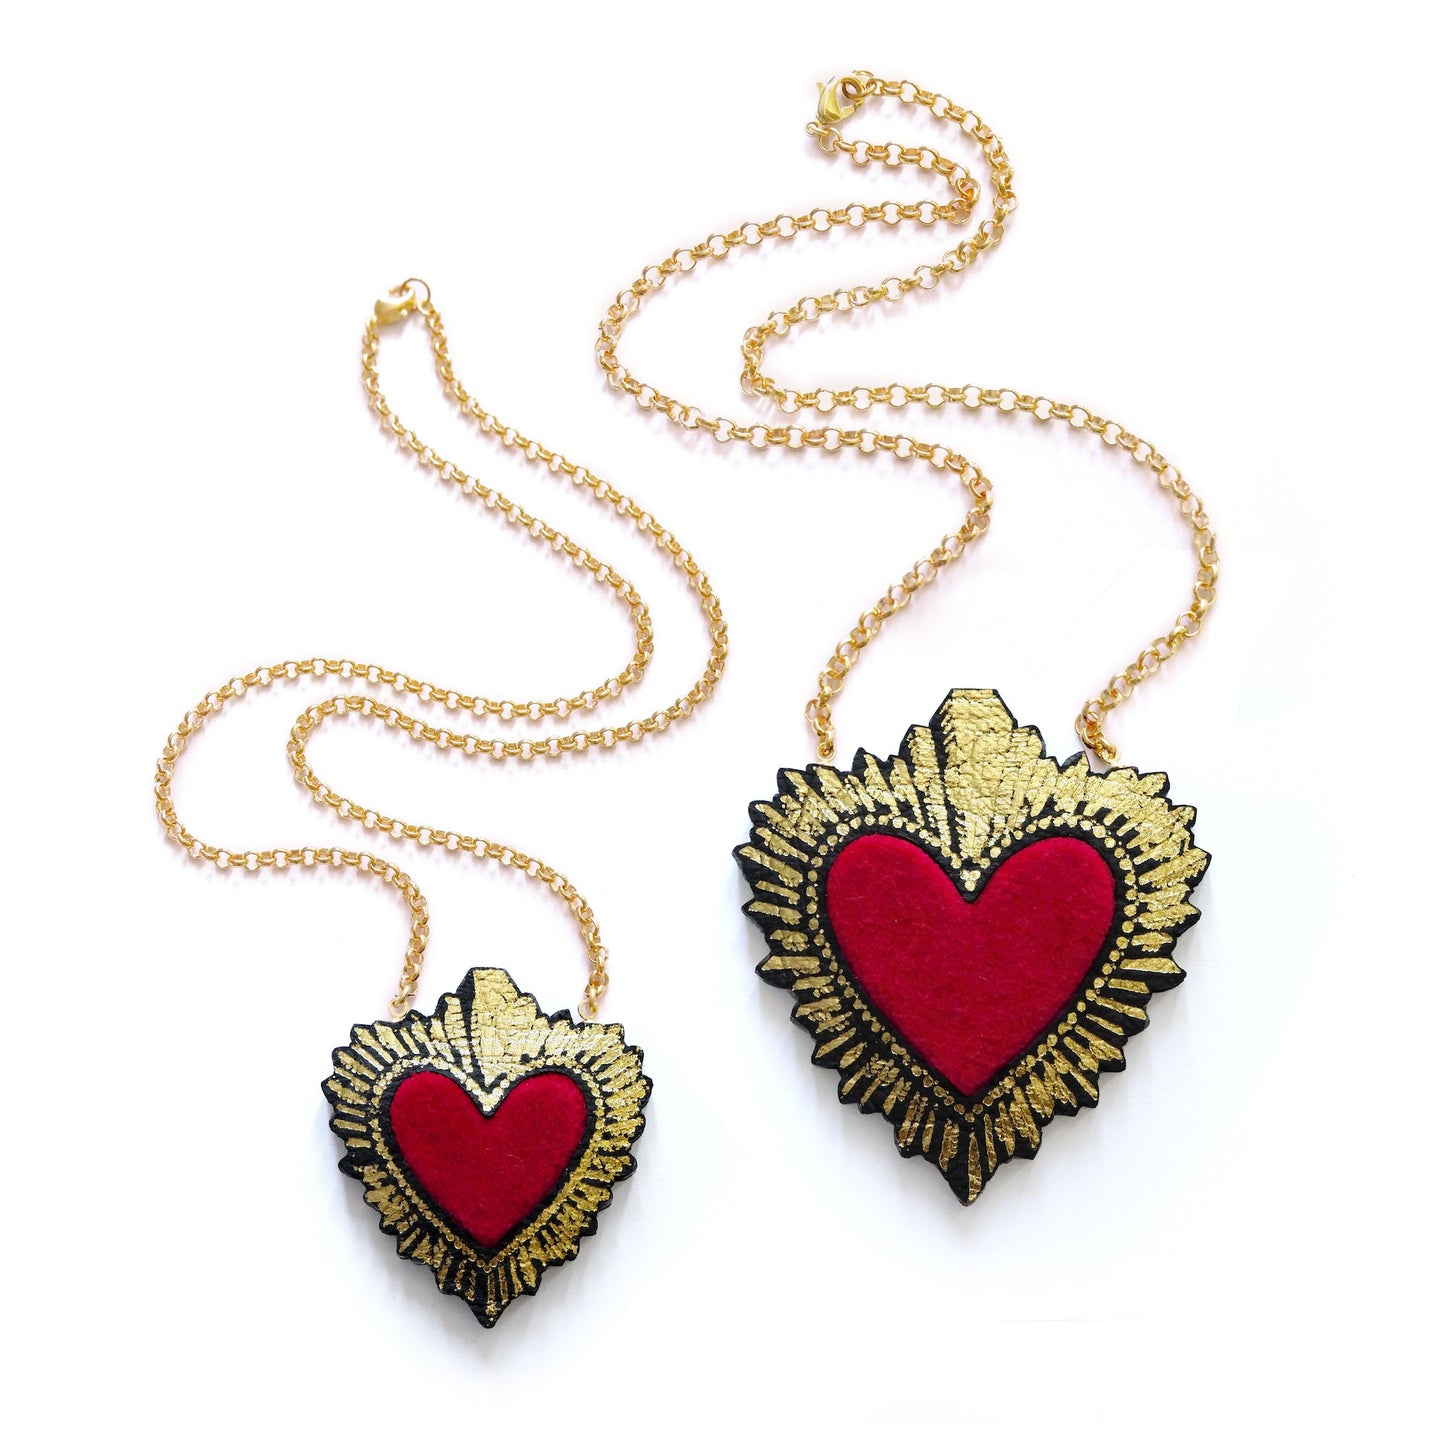 two sizes of red velvet sacred heart pendant necklace, on gold belcher chain